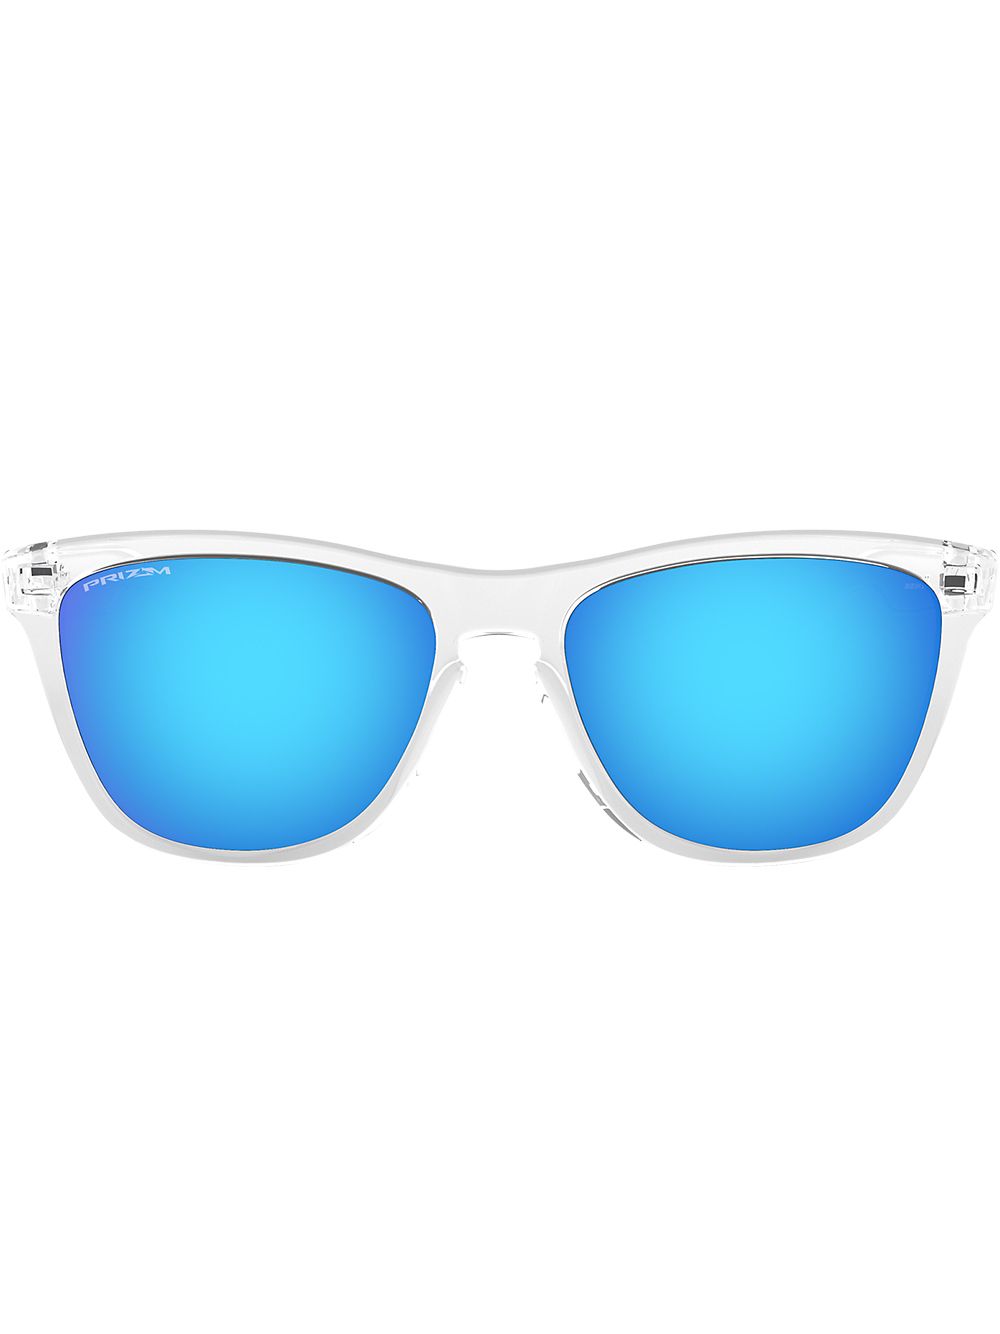 Image 1 of Oakley Frogskins sunglasses